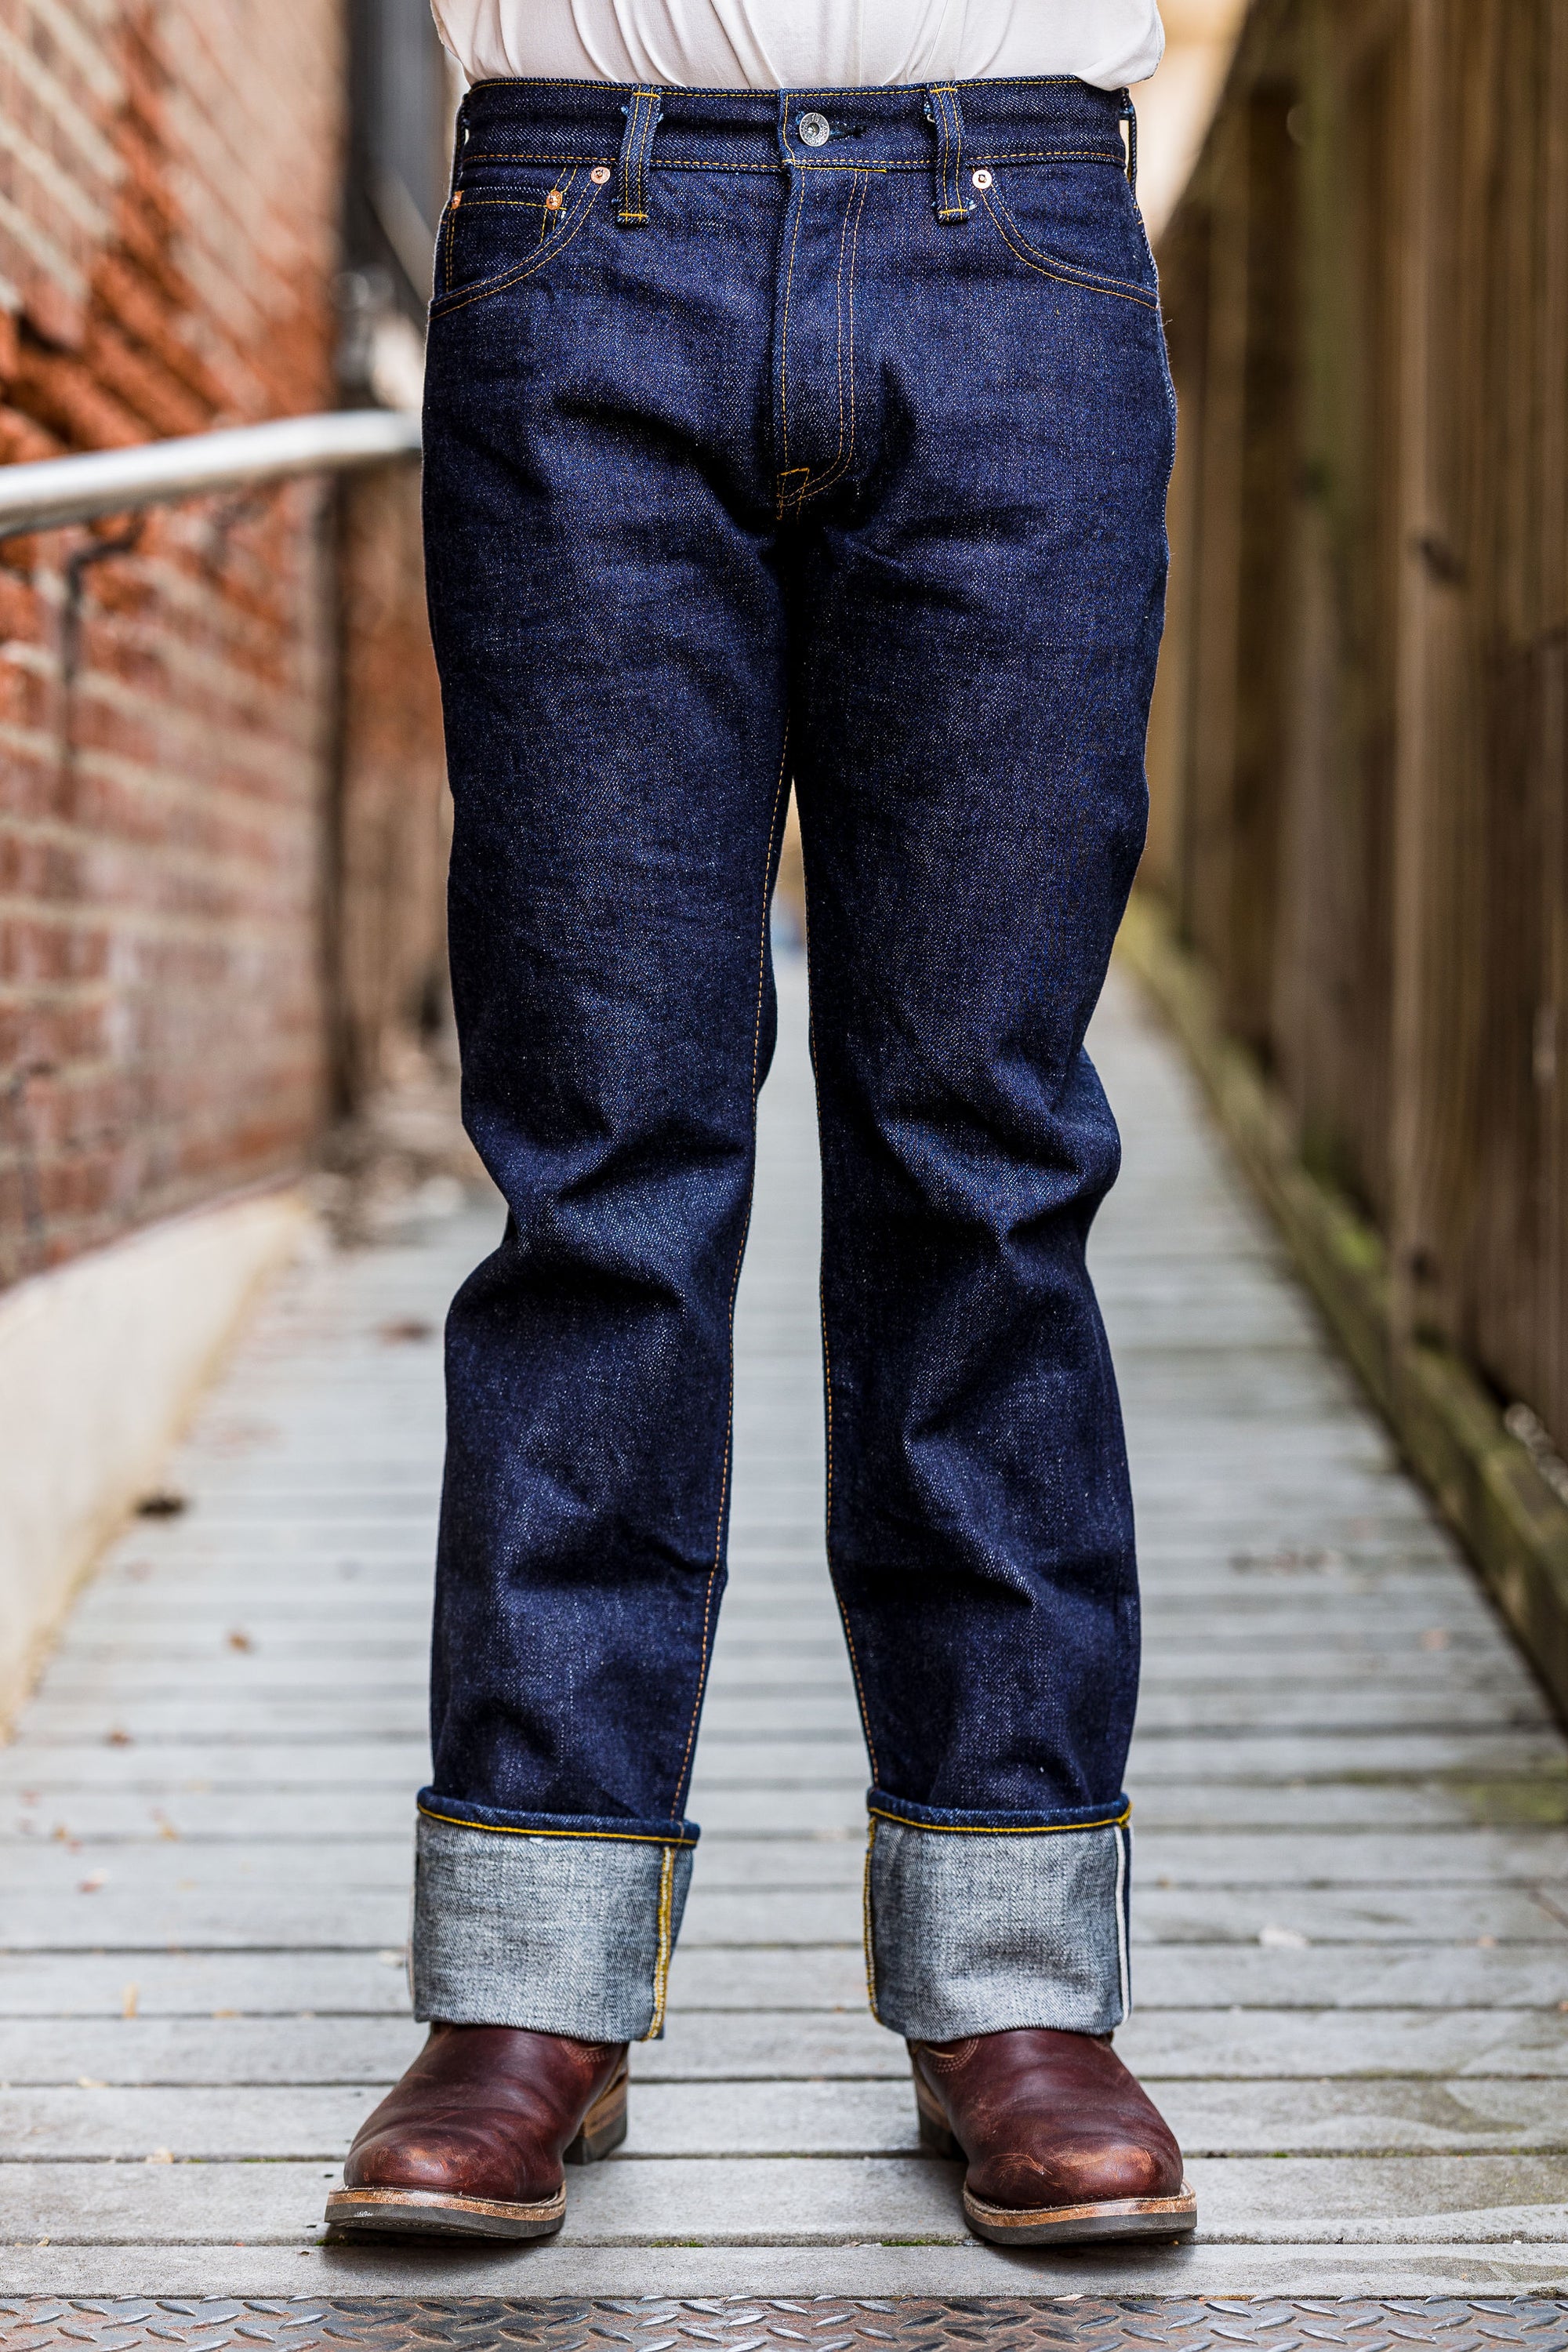 Jacquard Denim 5-Pocket Jeans Size 31